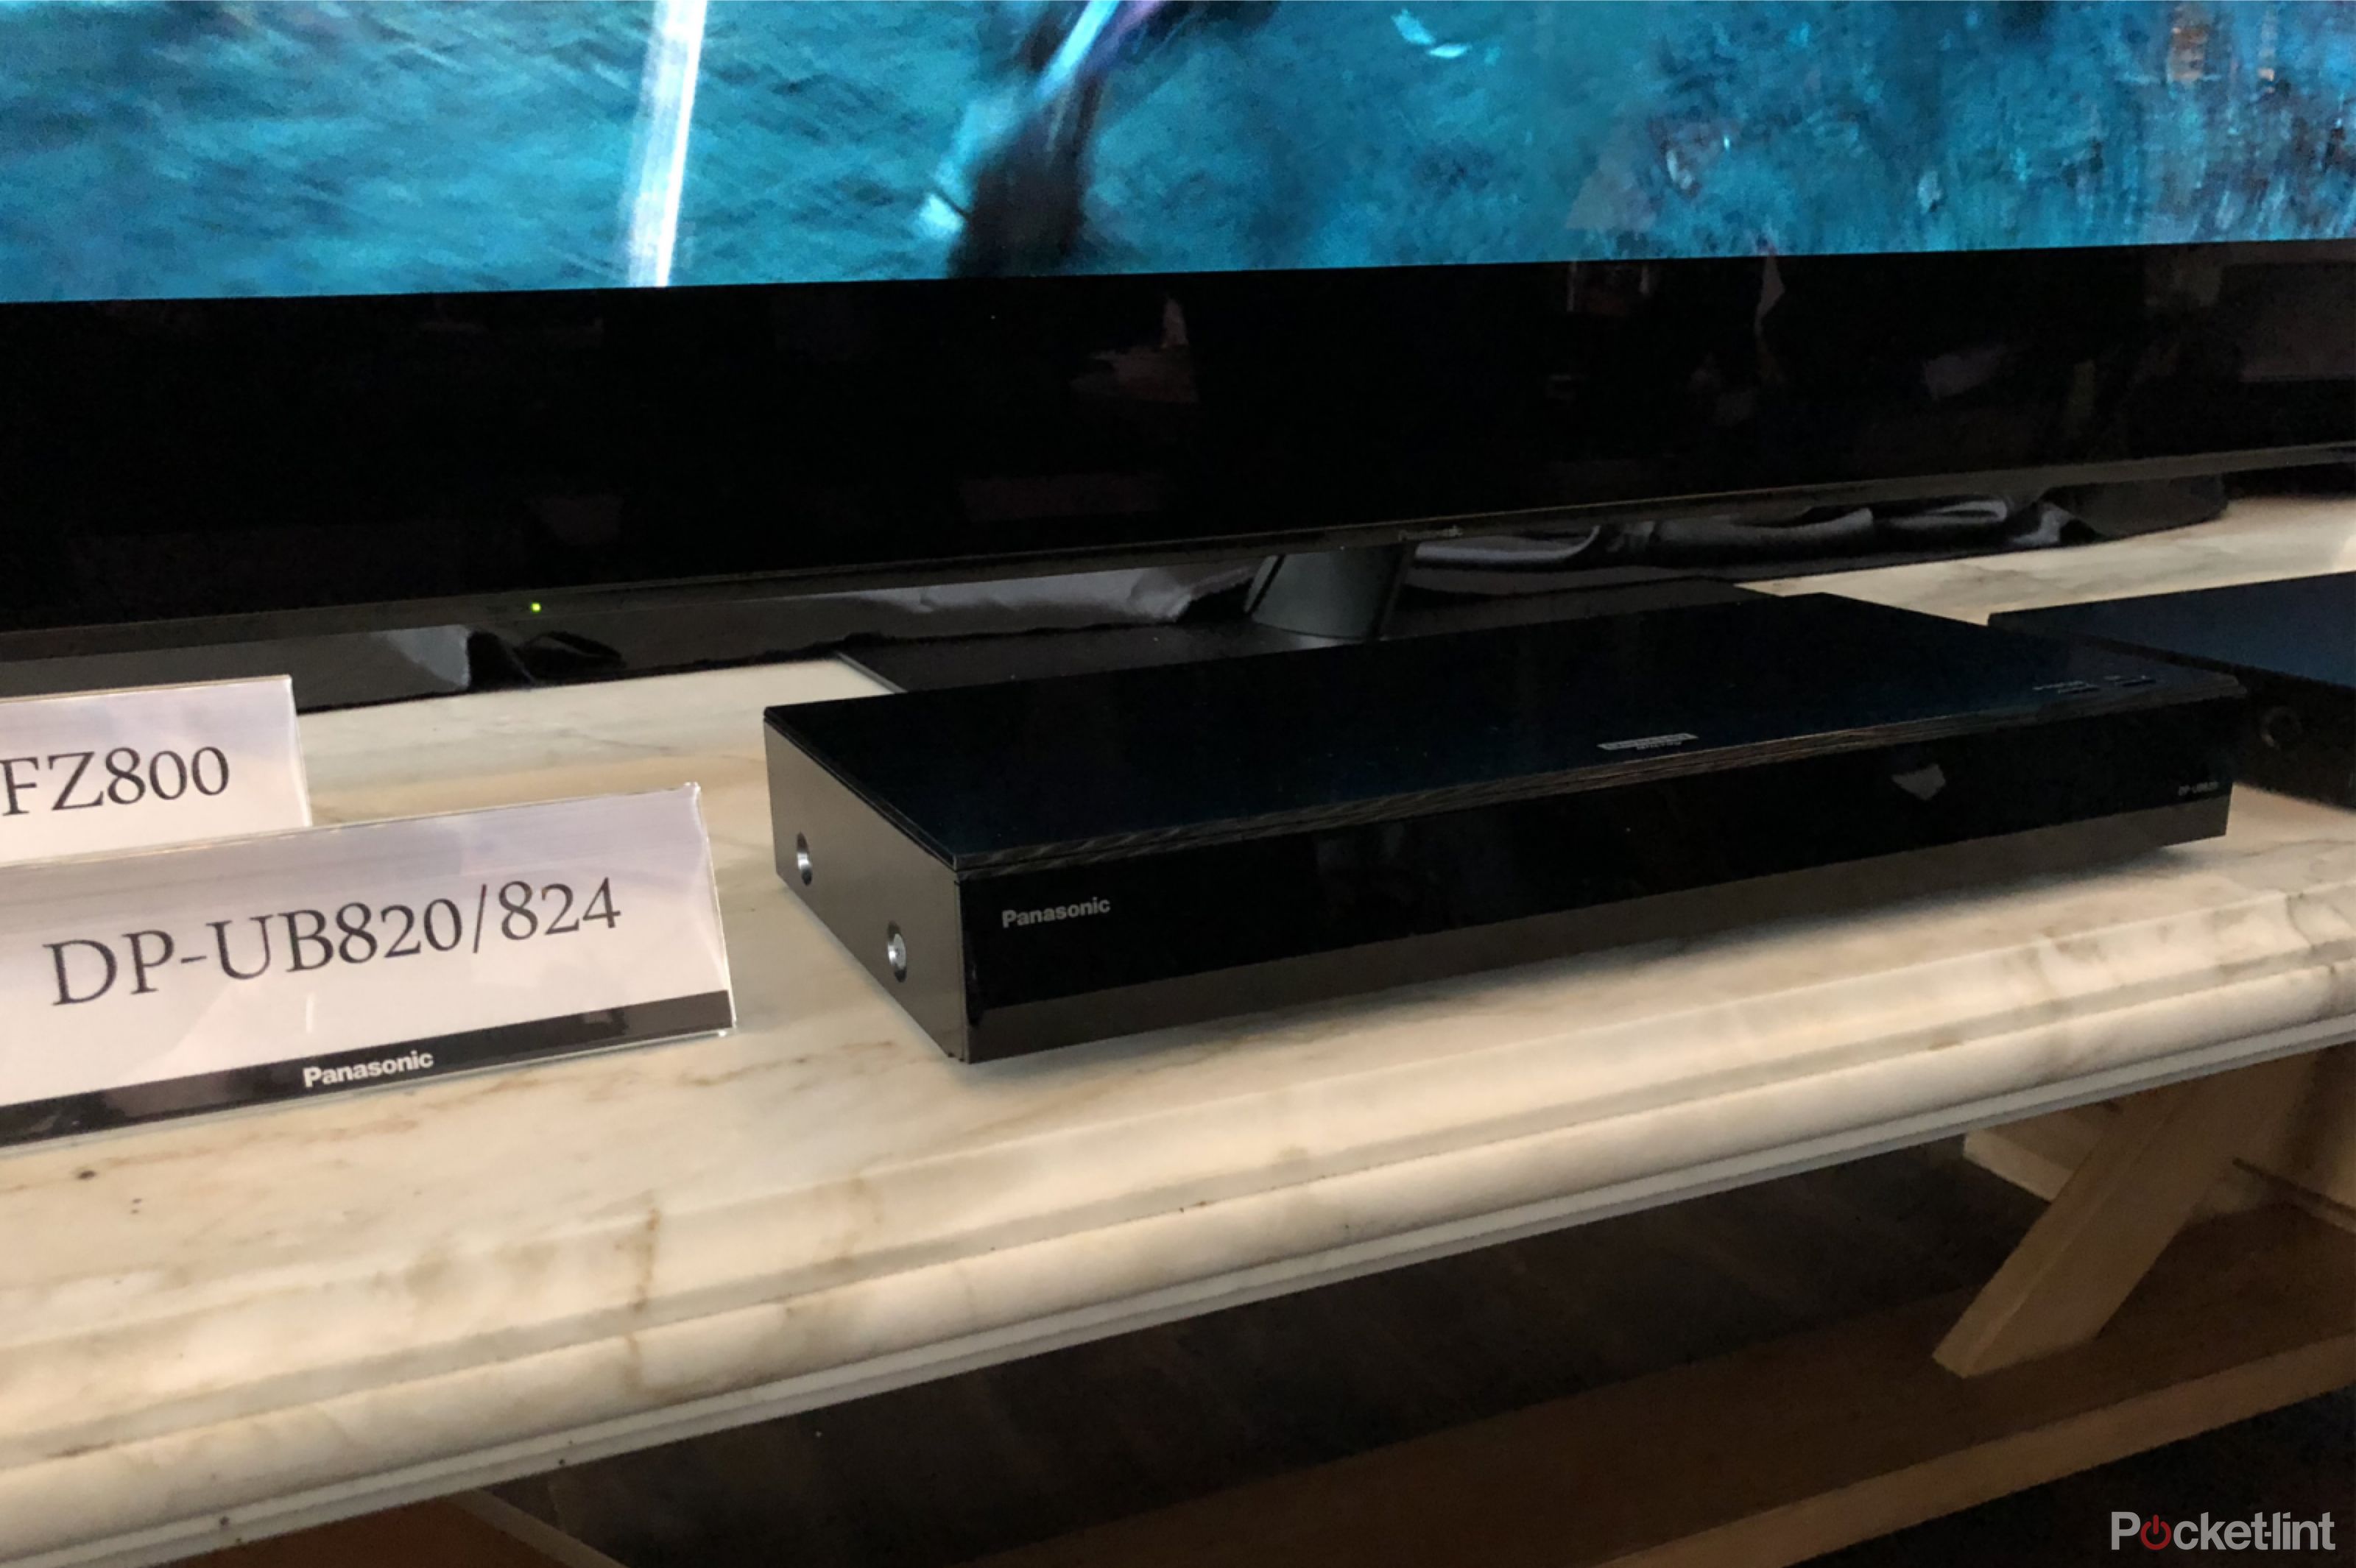 Lecteur Blu-ray Ultra HD Panasonic